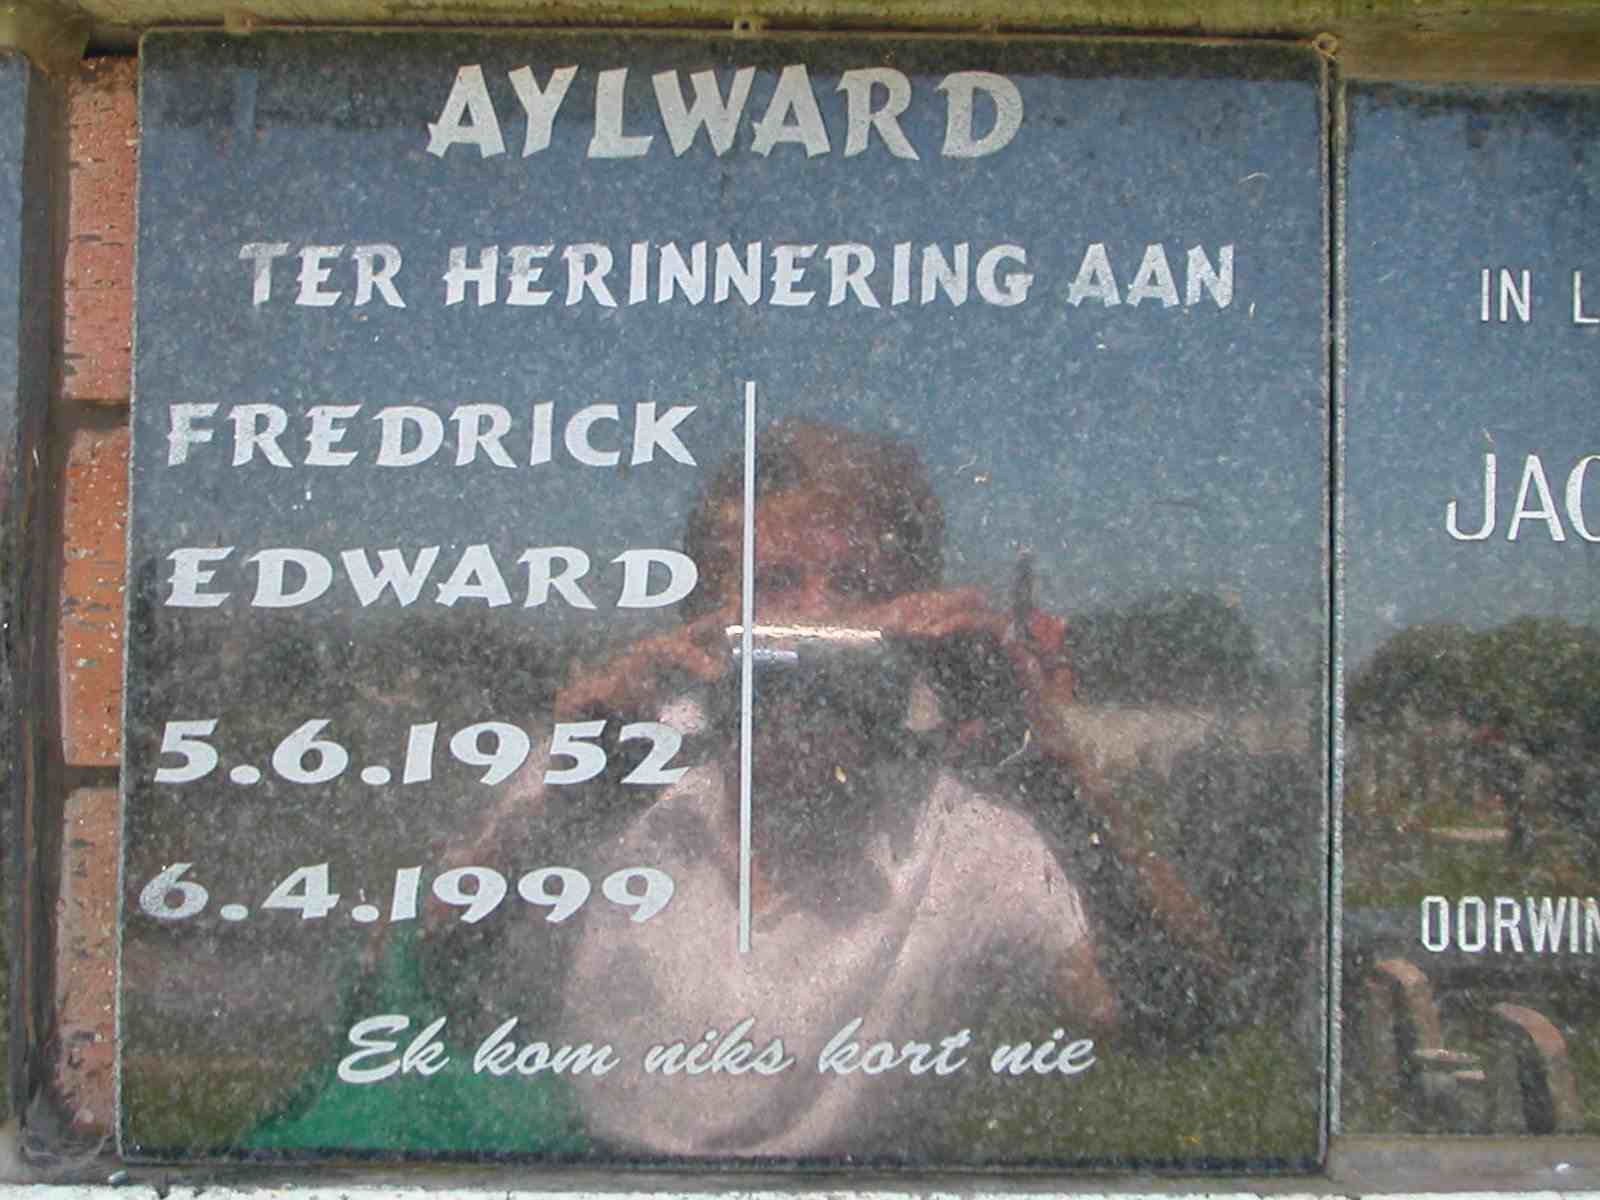 AYLWARD Fredrick Edward 1952-1999